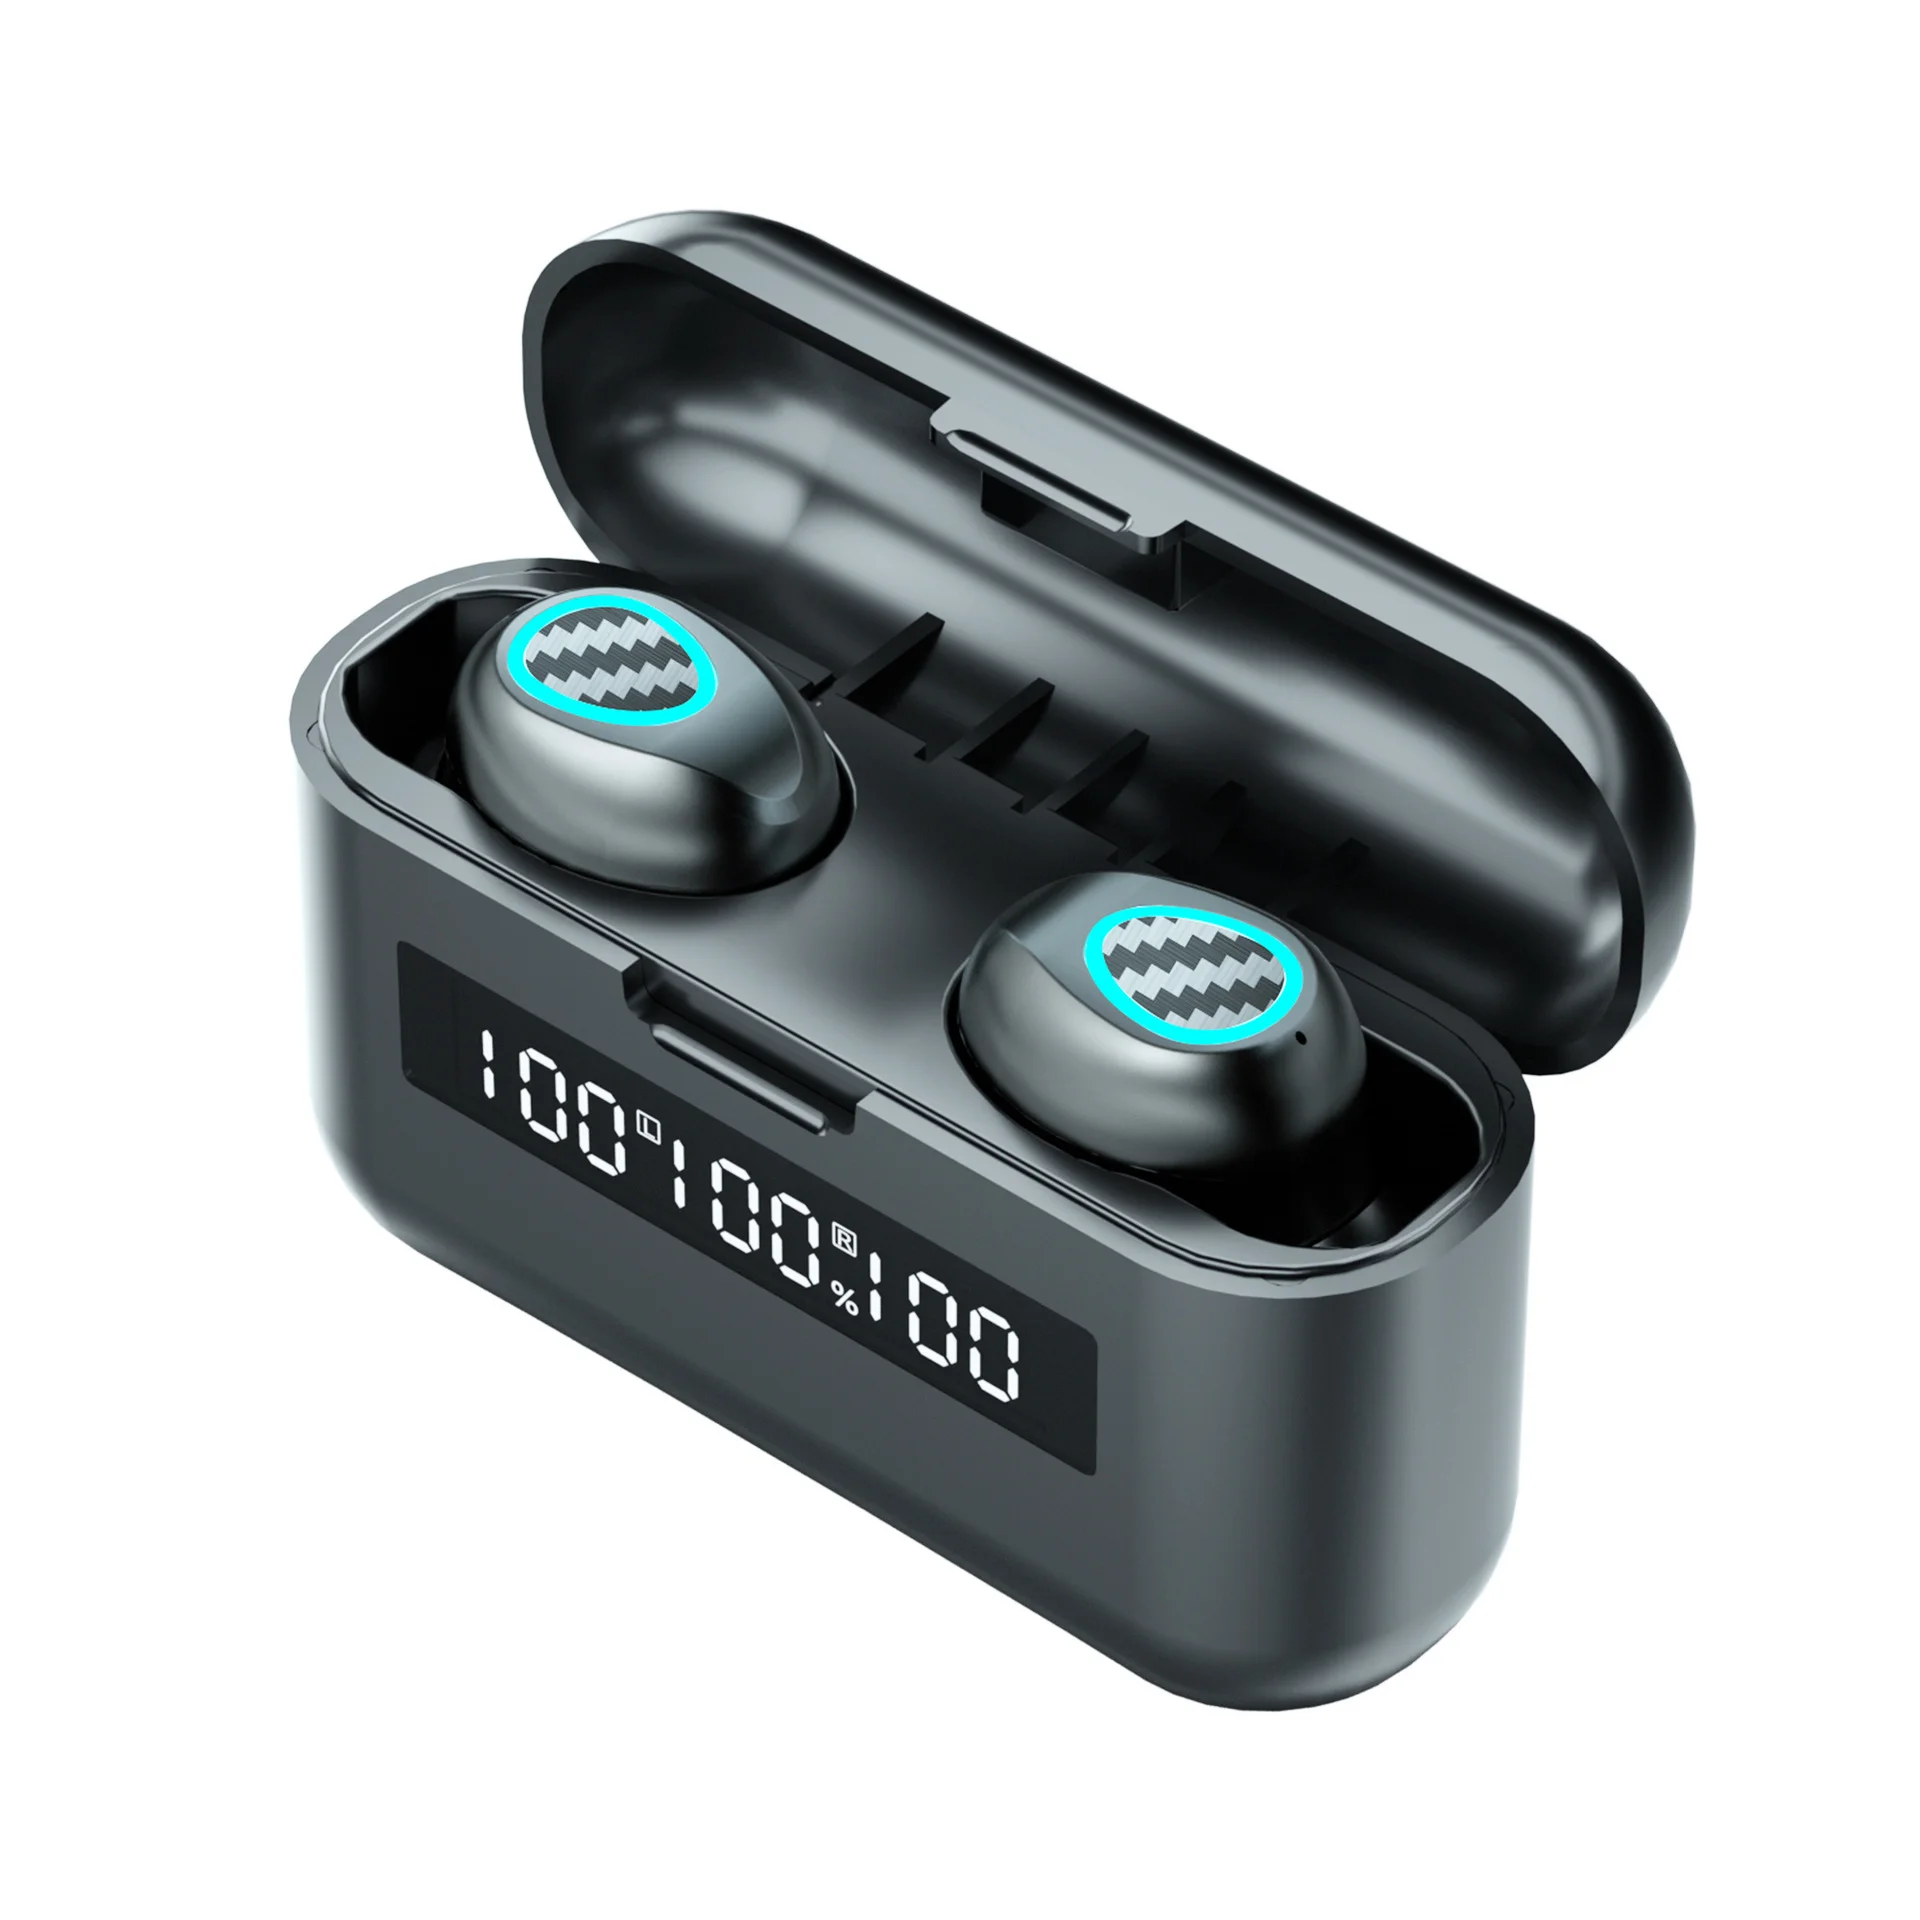 

New Product 2021 Earbuds IPX-7 Waterproof Sweatproof HIFI Sound Quality HD LED Display Stereo Wireless Earphones